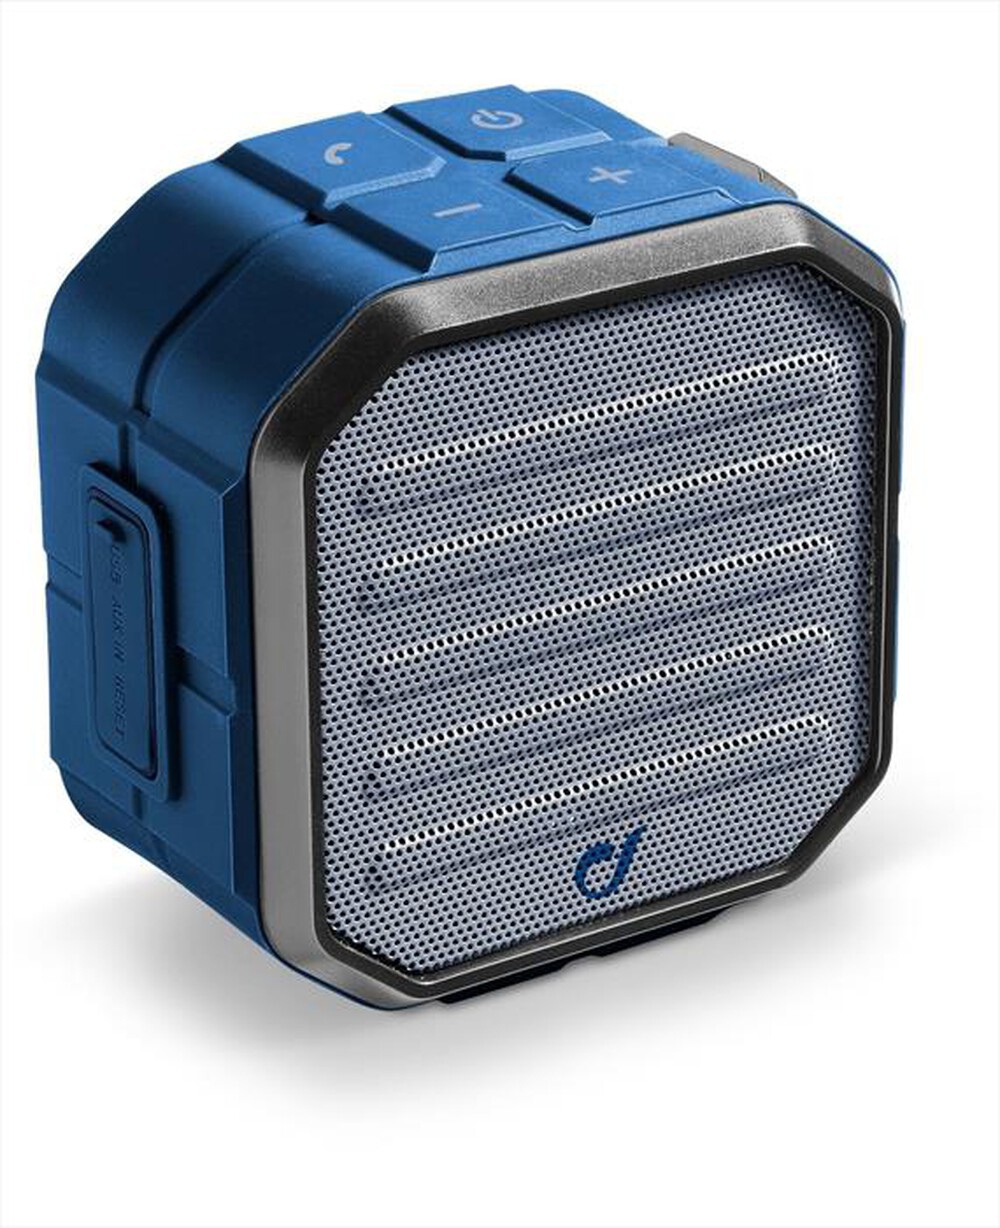 "CELLULARLINE - Muscle speaker bluetooth-Blu"